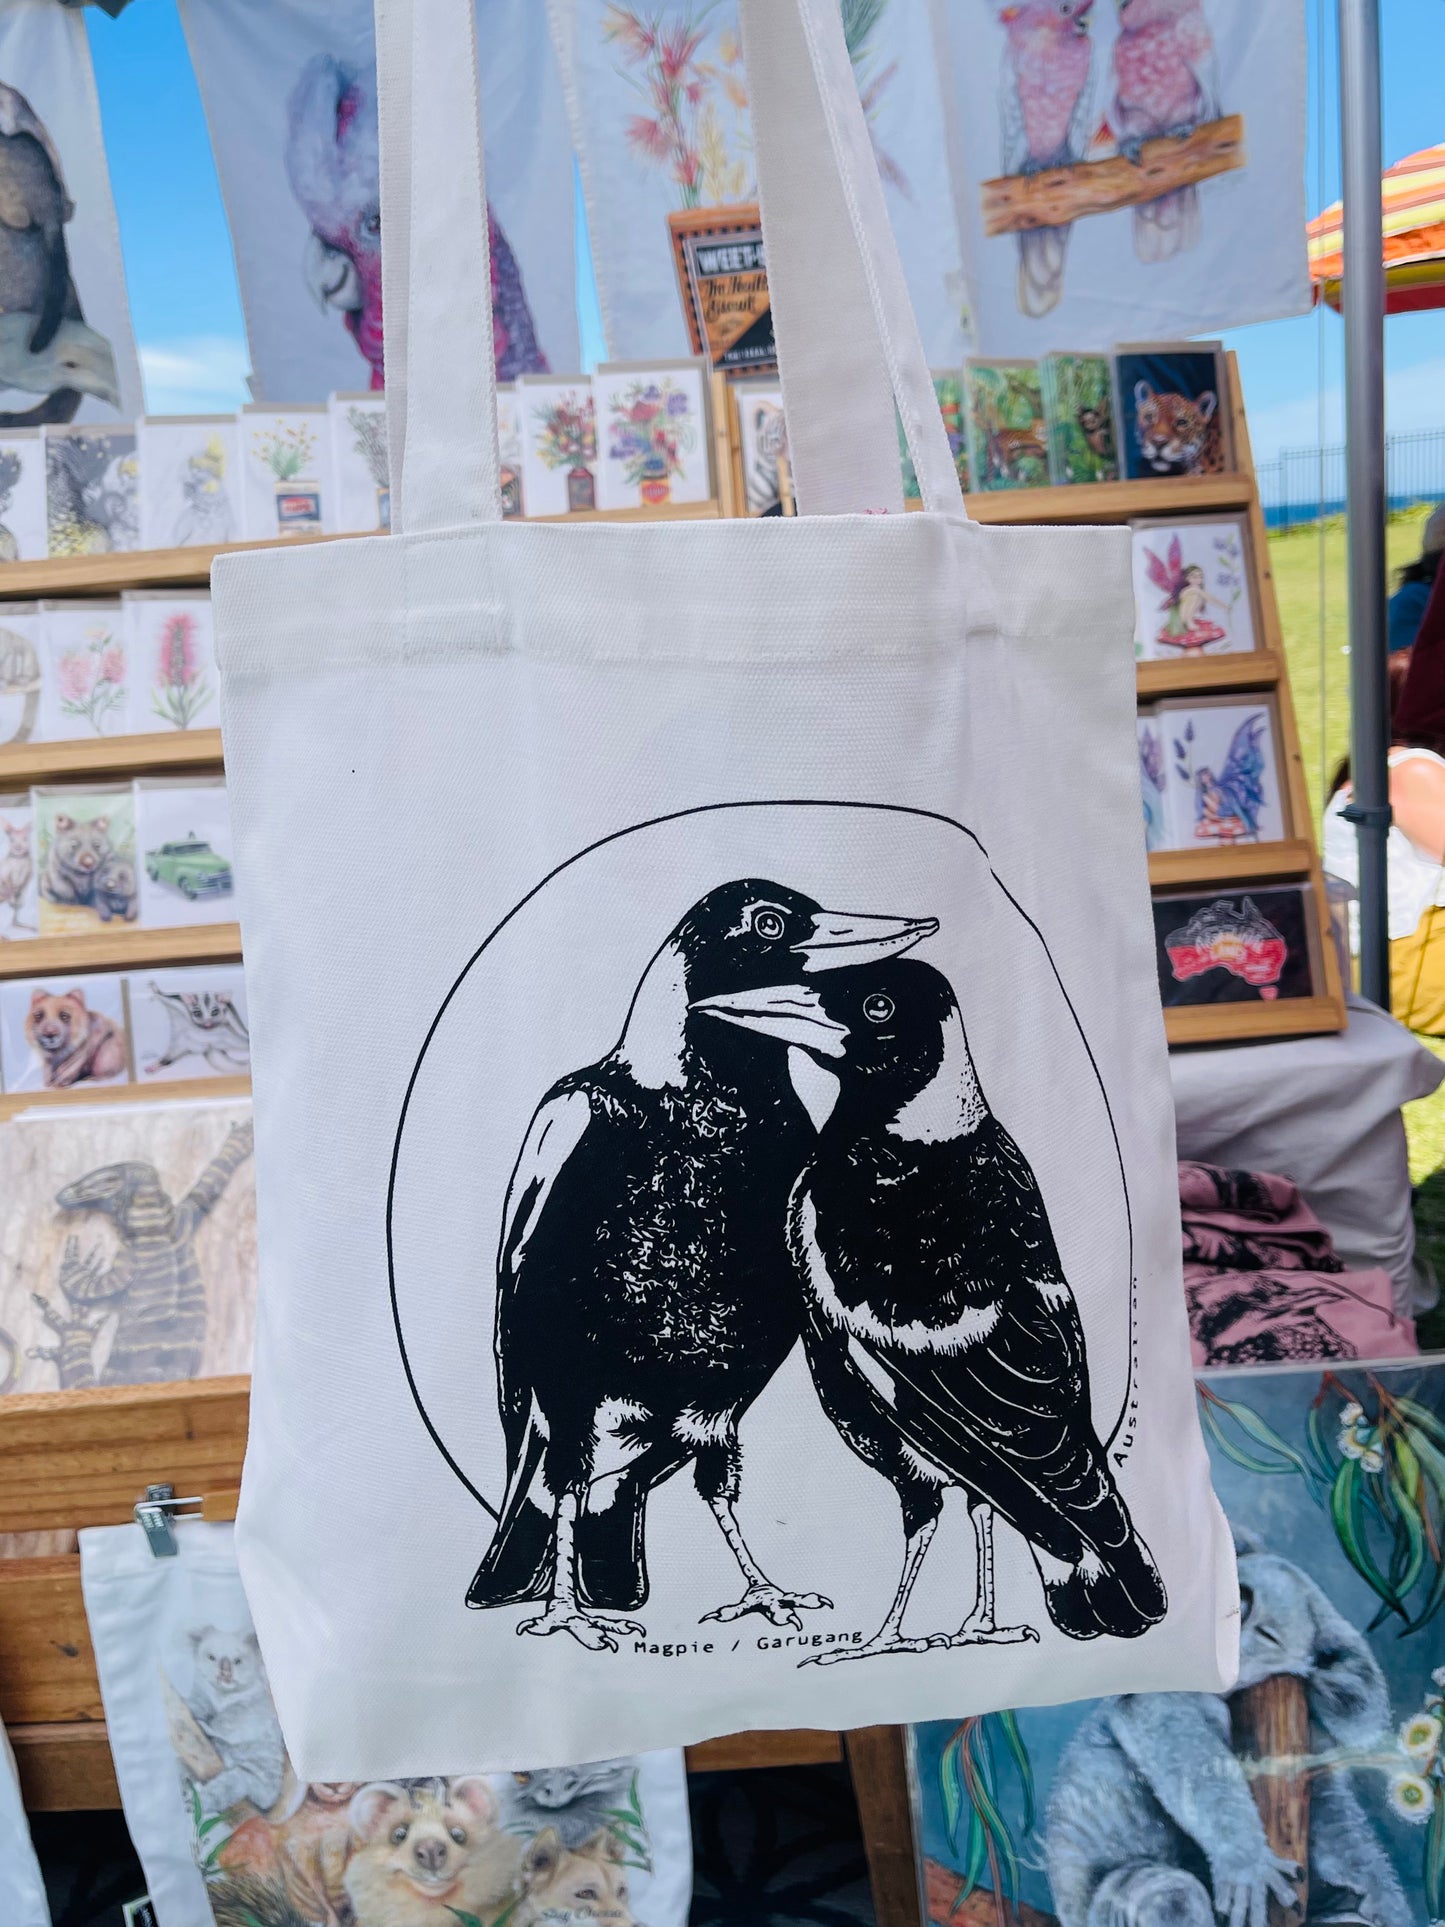 Magpies Canvas Tote Bag